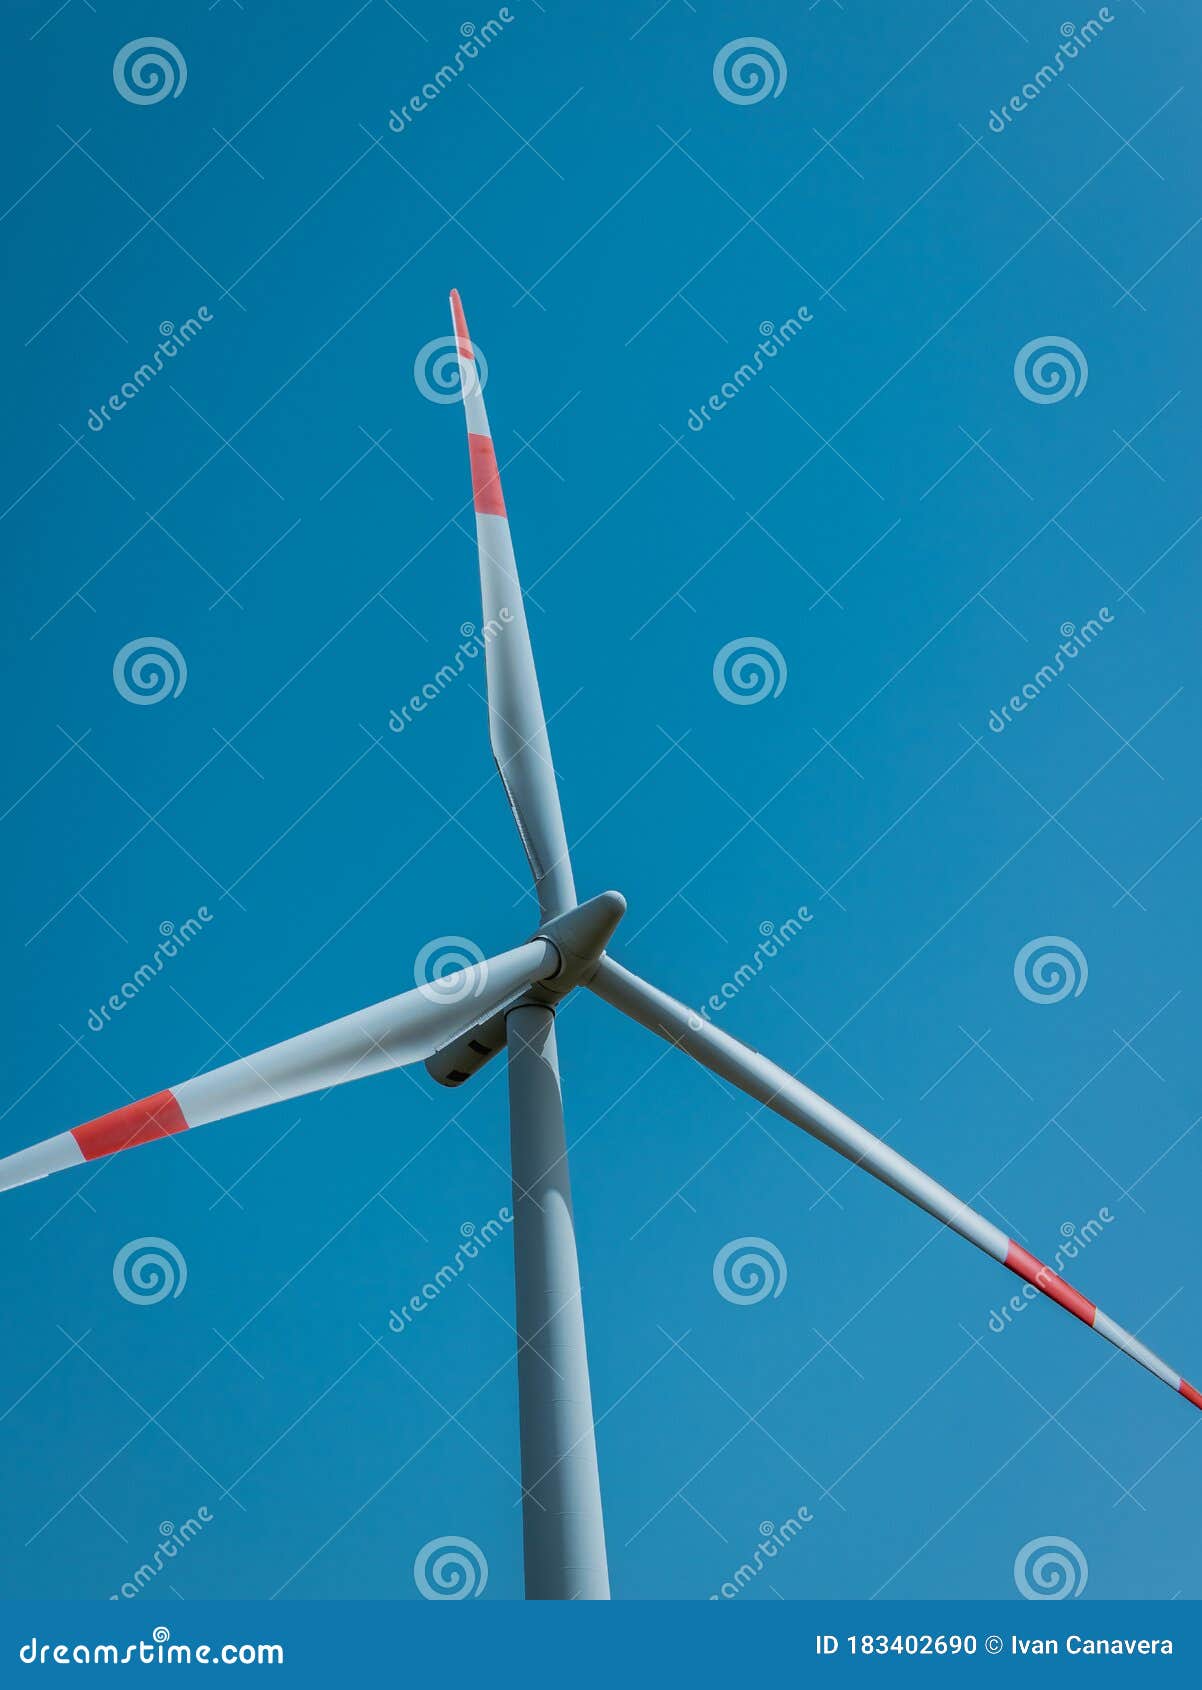 wind turbine with beautiful blue sky